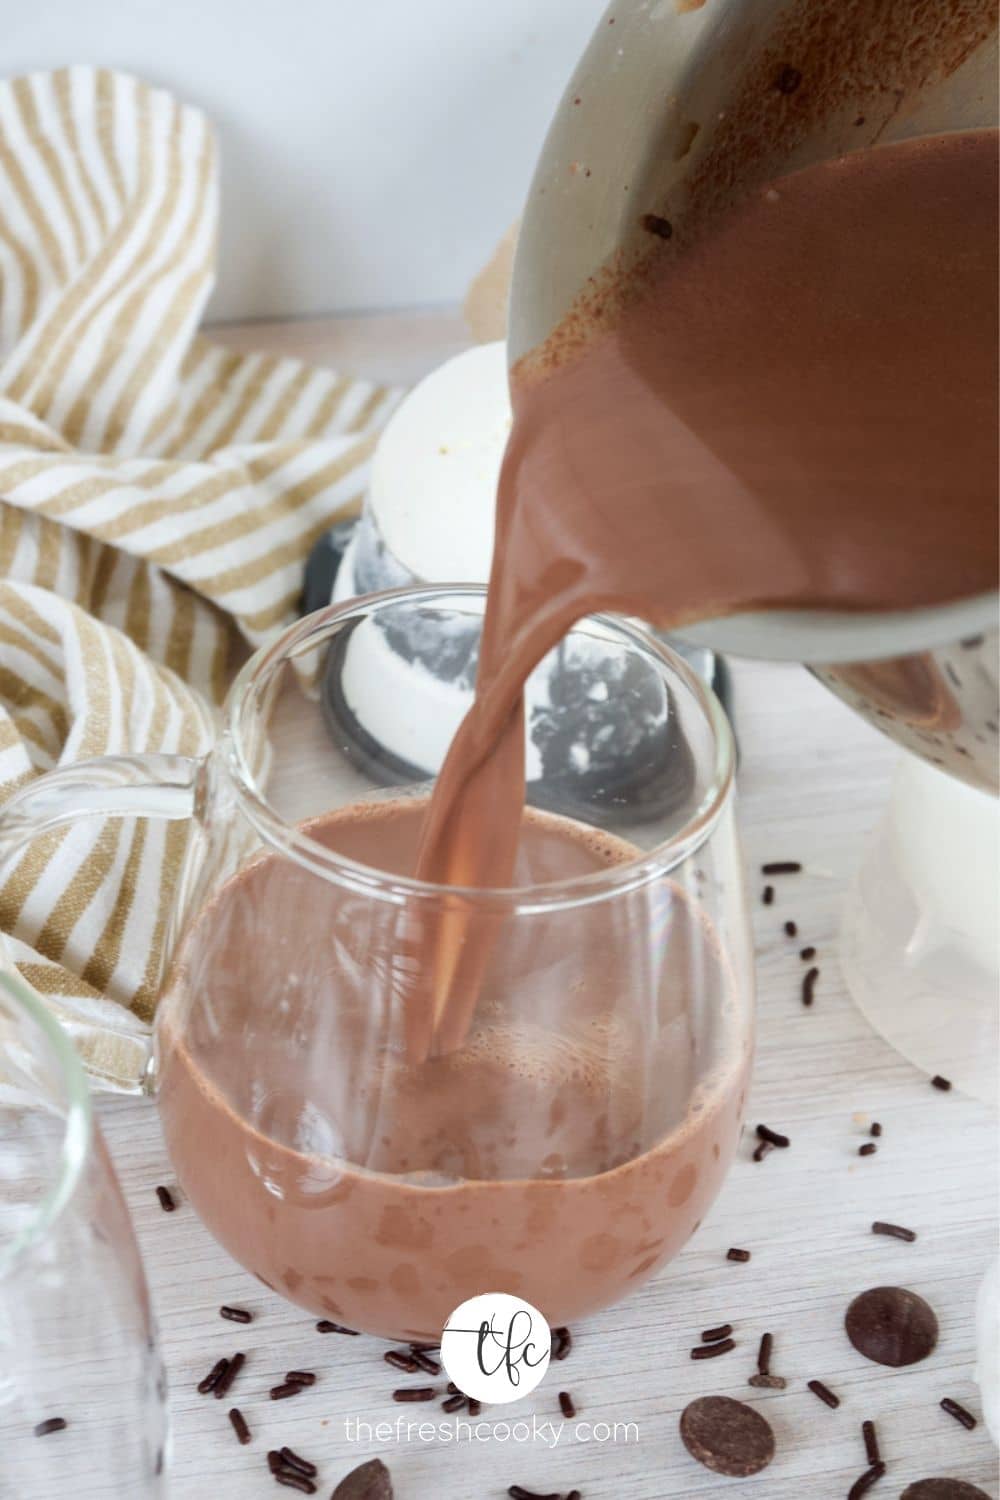 A small saucepan pouring homemade hot chocolate into a glass mug.